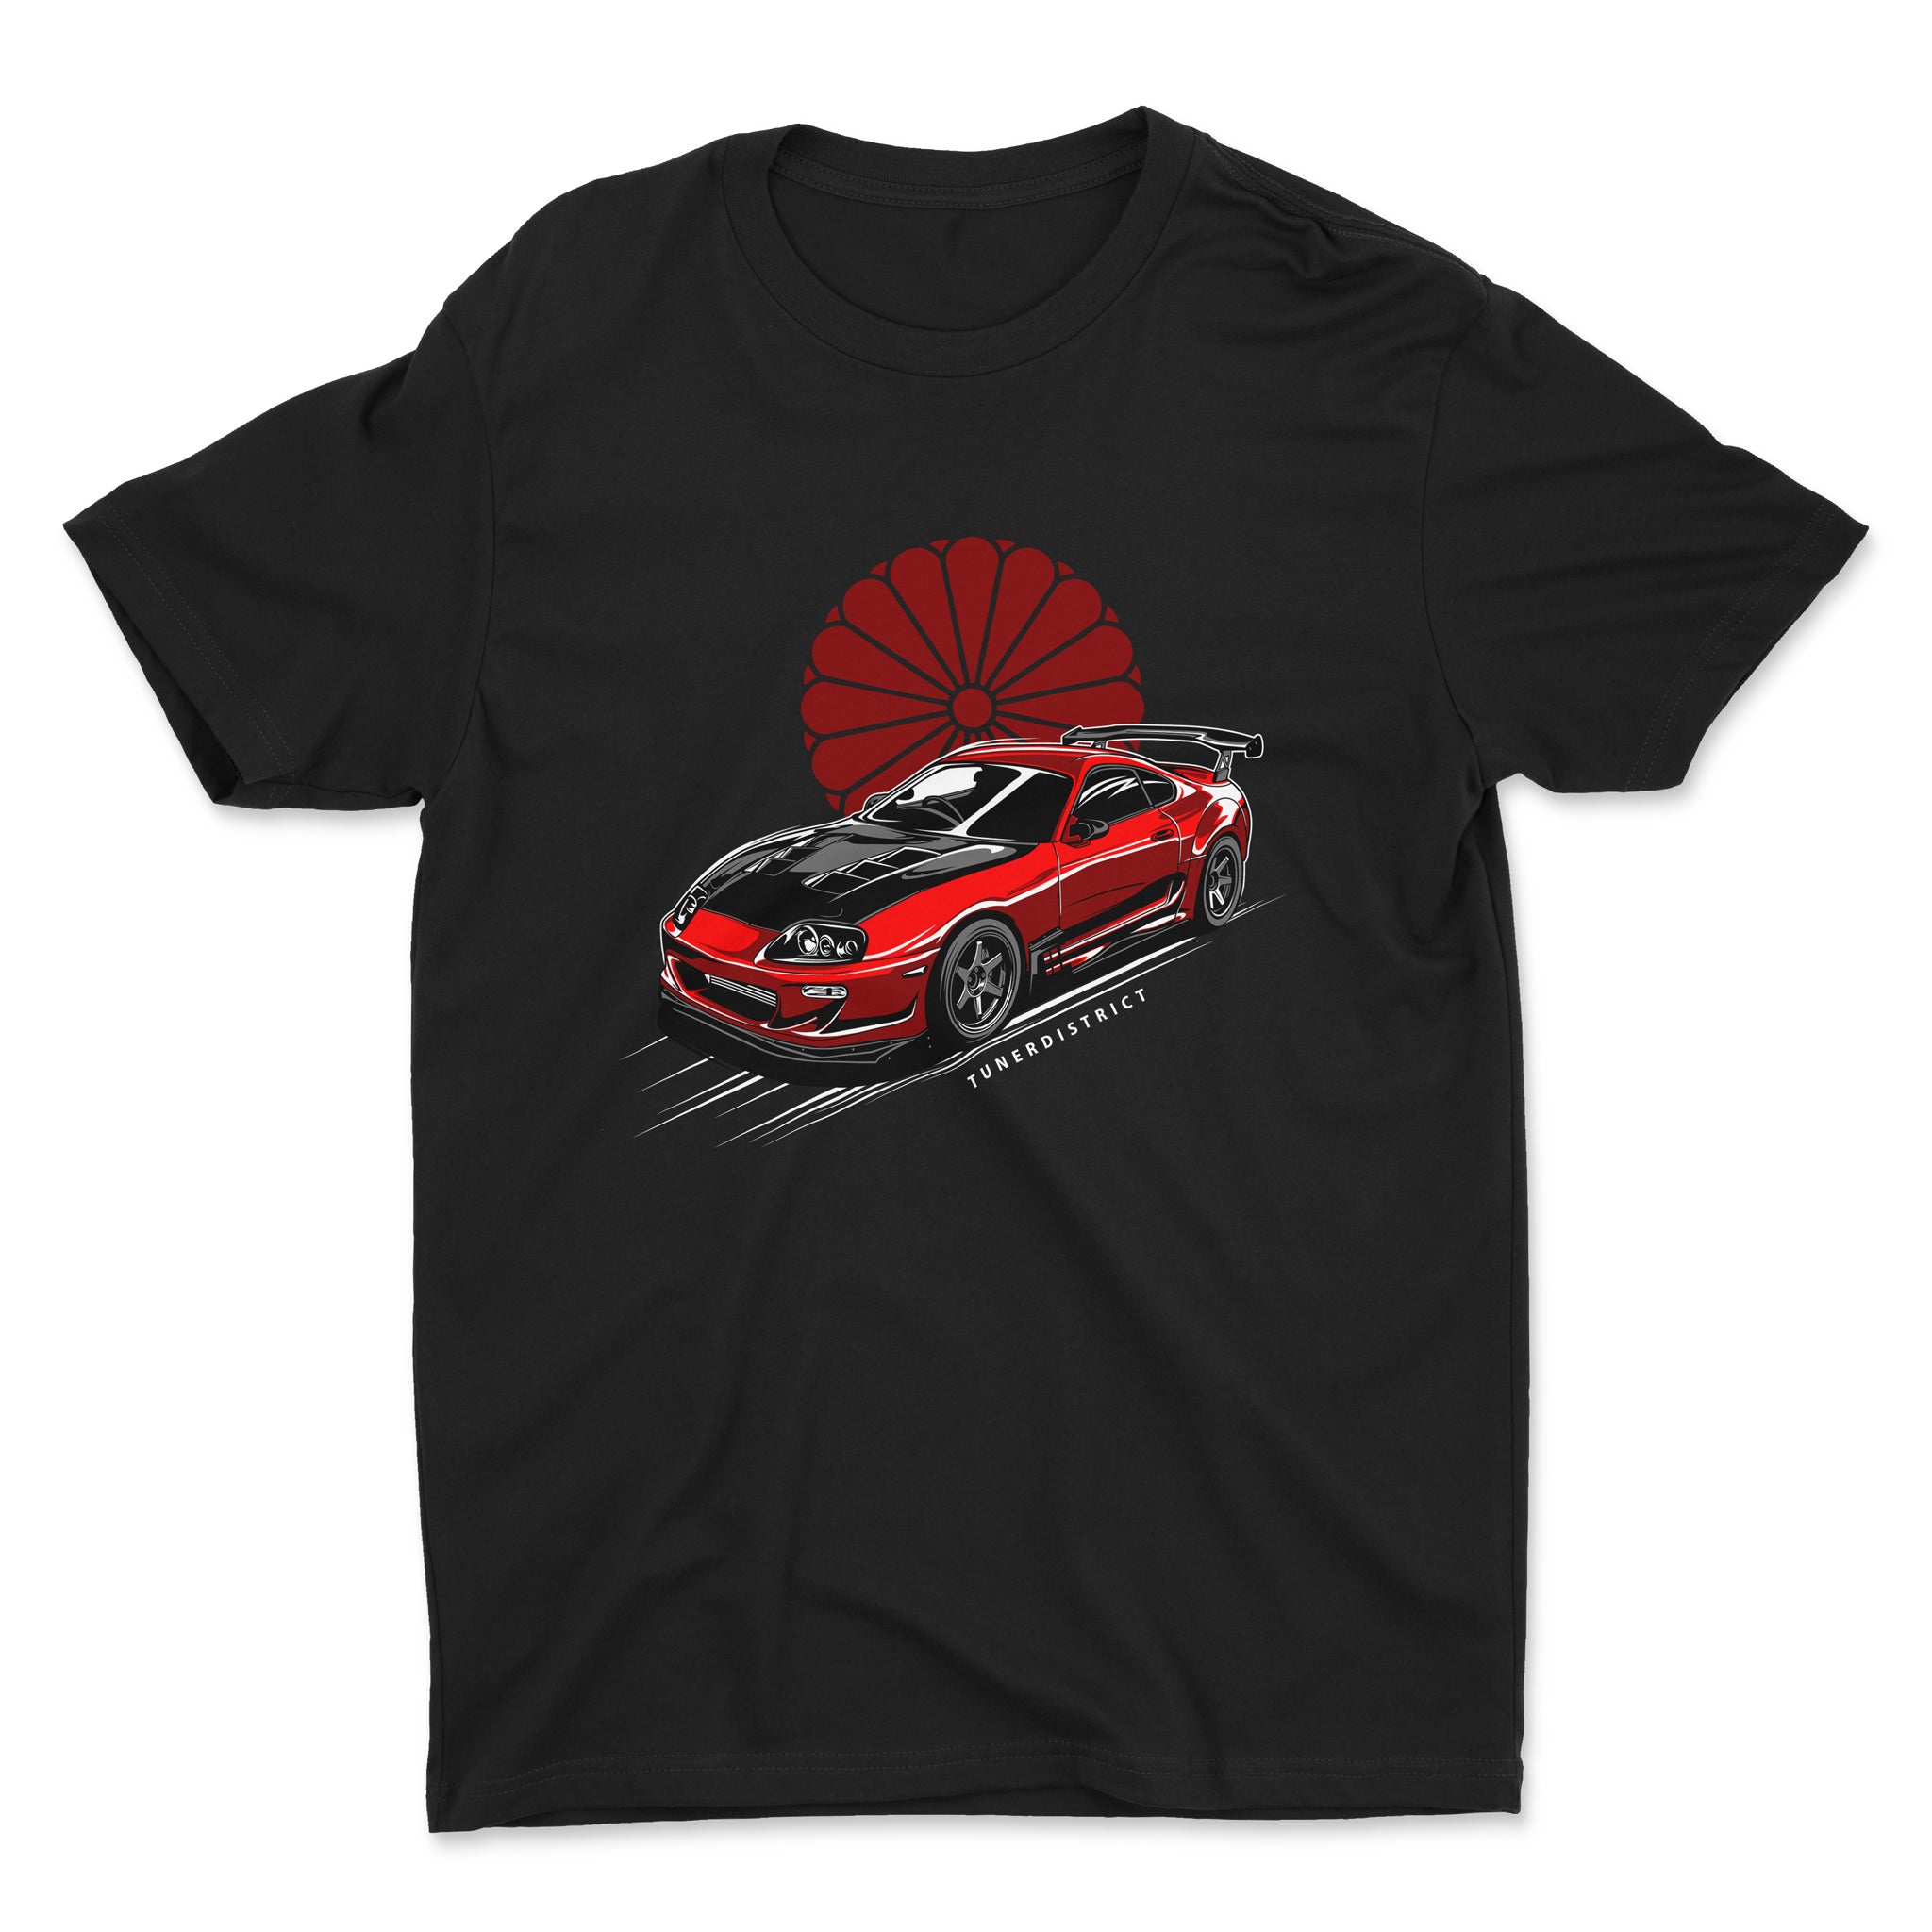 Toyota Supra MK4 JDM Car T-Shirt in Black.